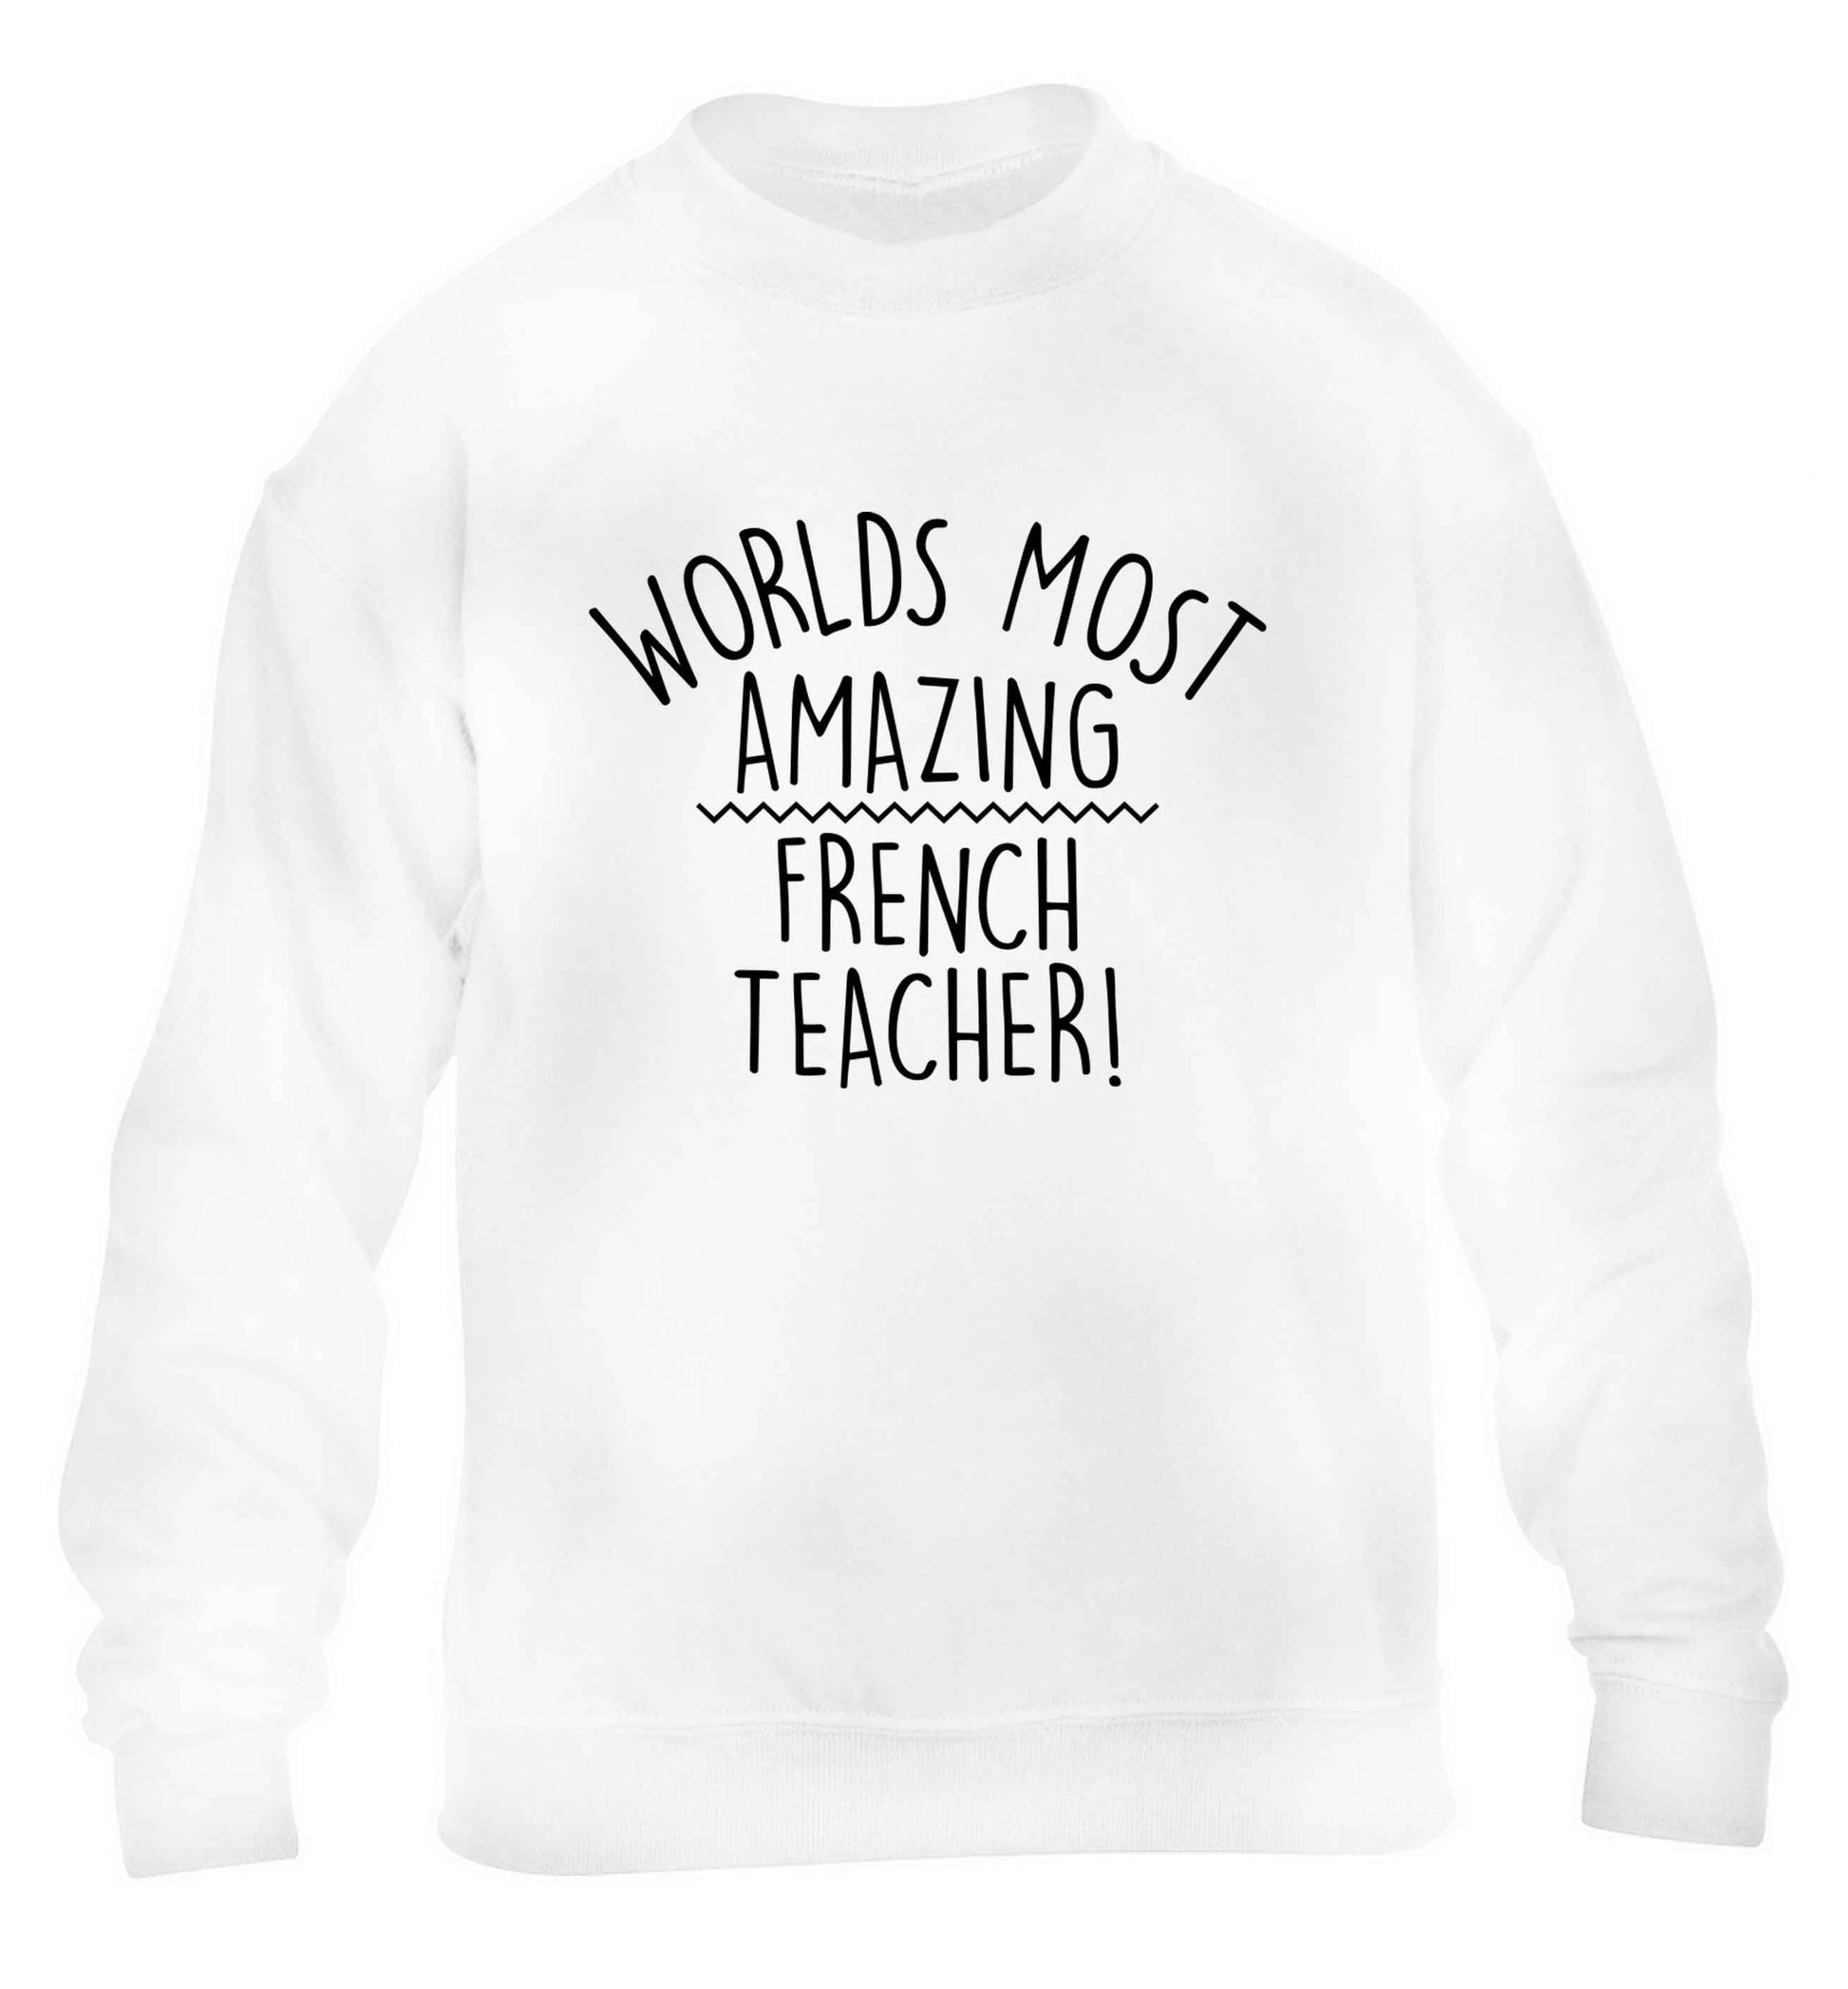 Worlds most amazing French teacher children's white sweater 12-13 Years